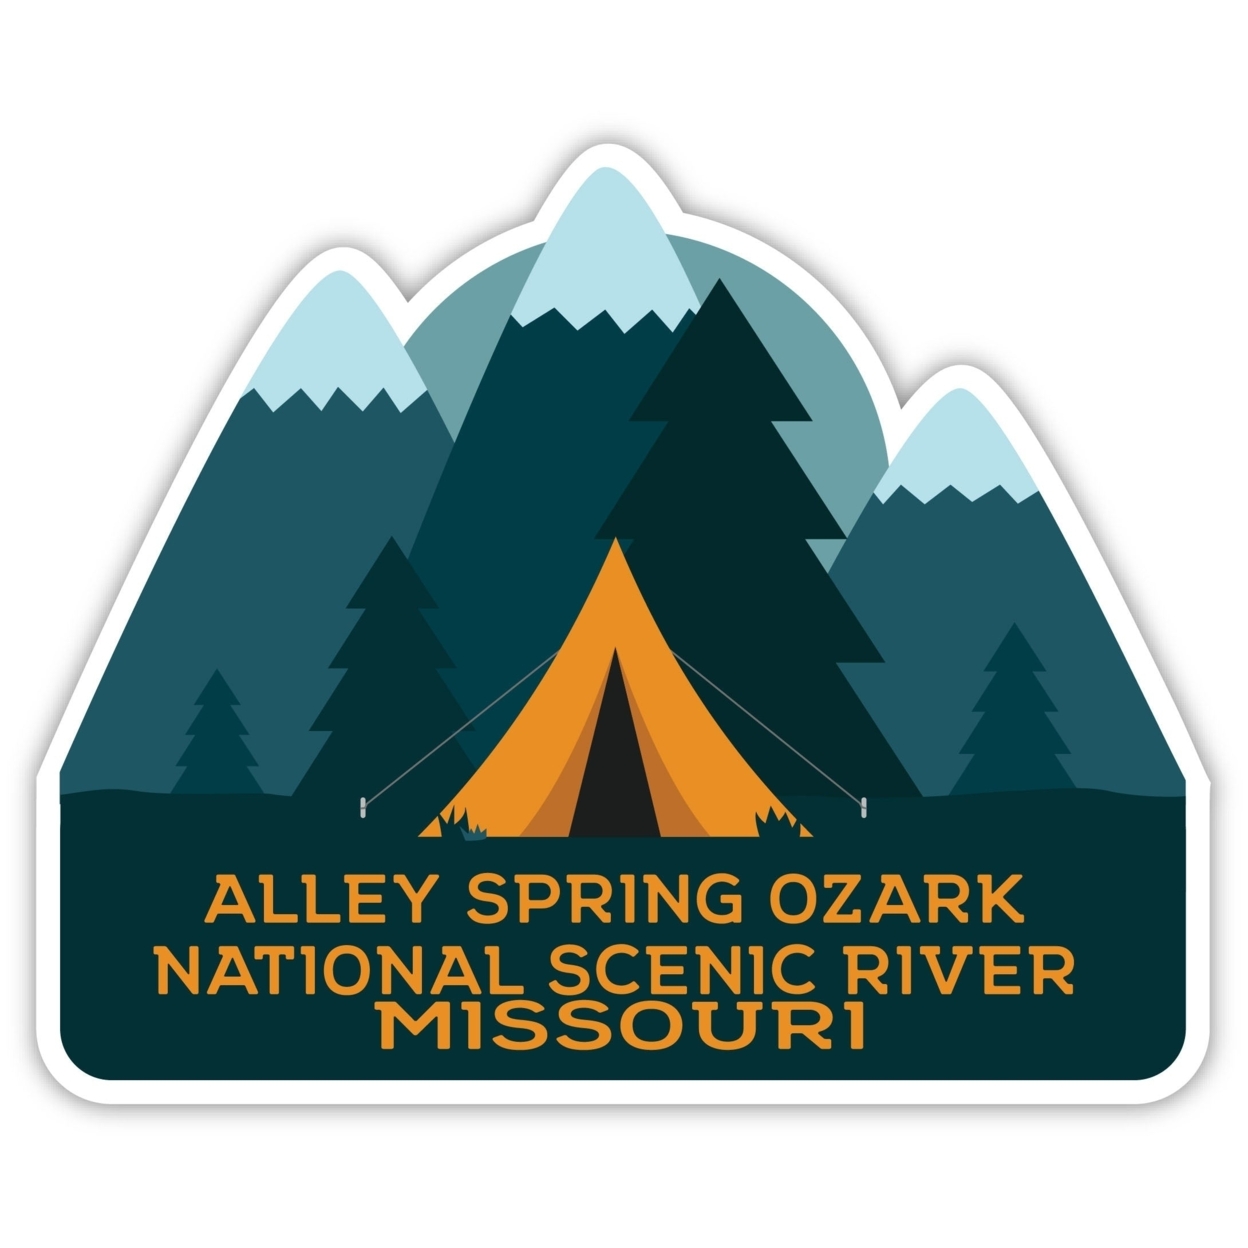 Alley Spring Ozark National Scenic River Missouri Souvenir Decorative Stickers (Choose Theme And Size) - Single Unit, 4-Inch, Tent